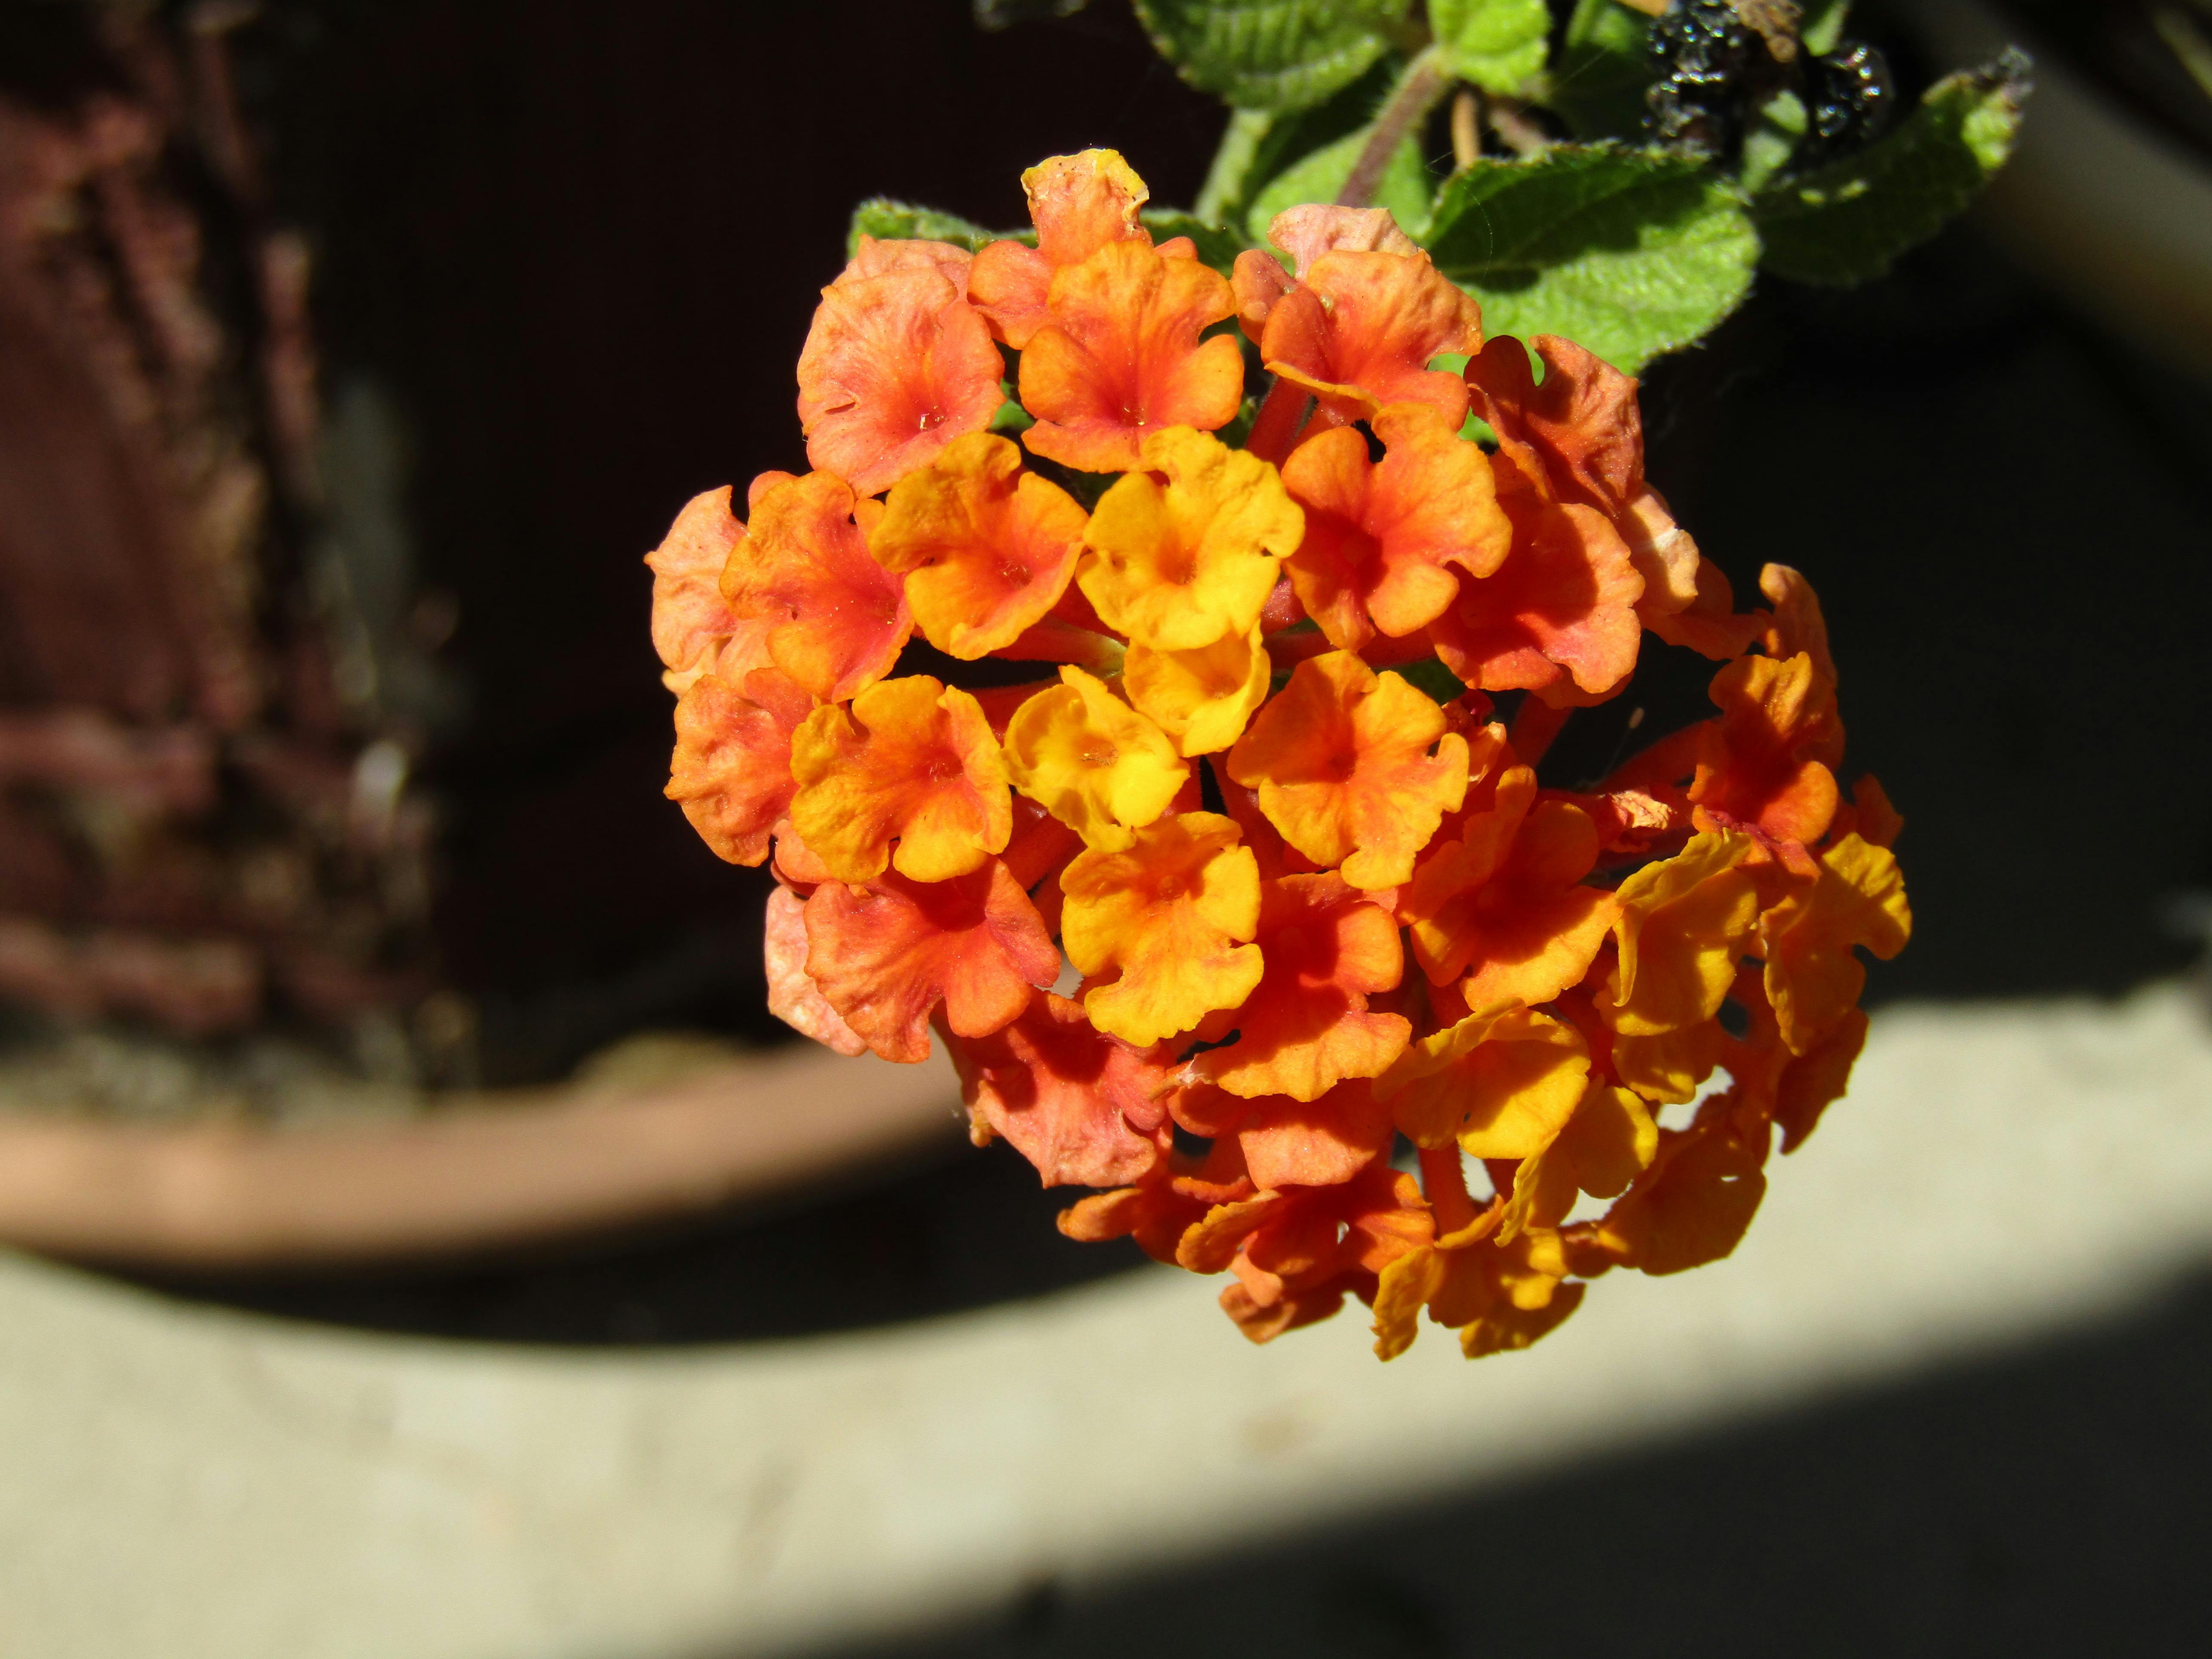 Free stock photo of flower, nature, orange flower